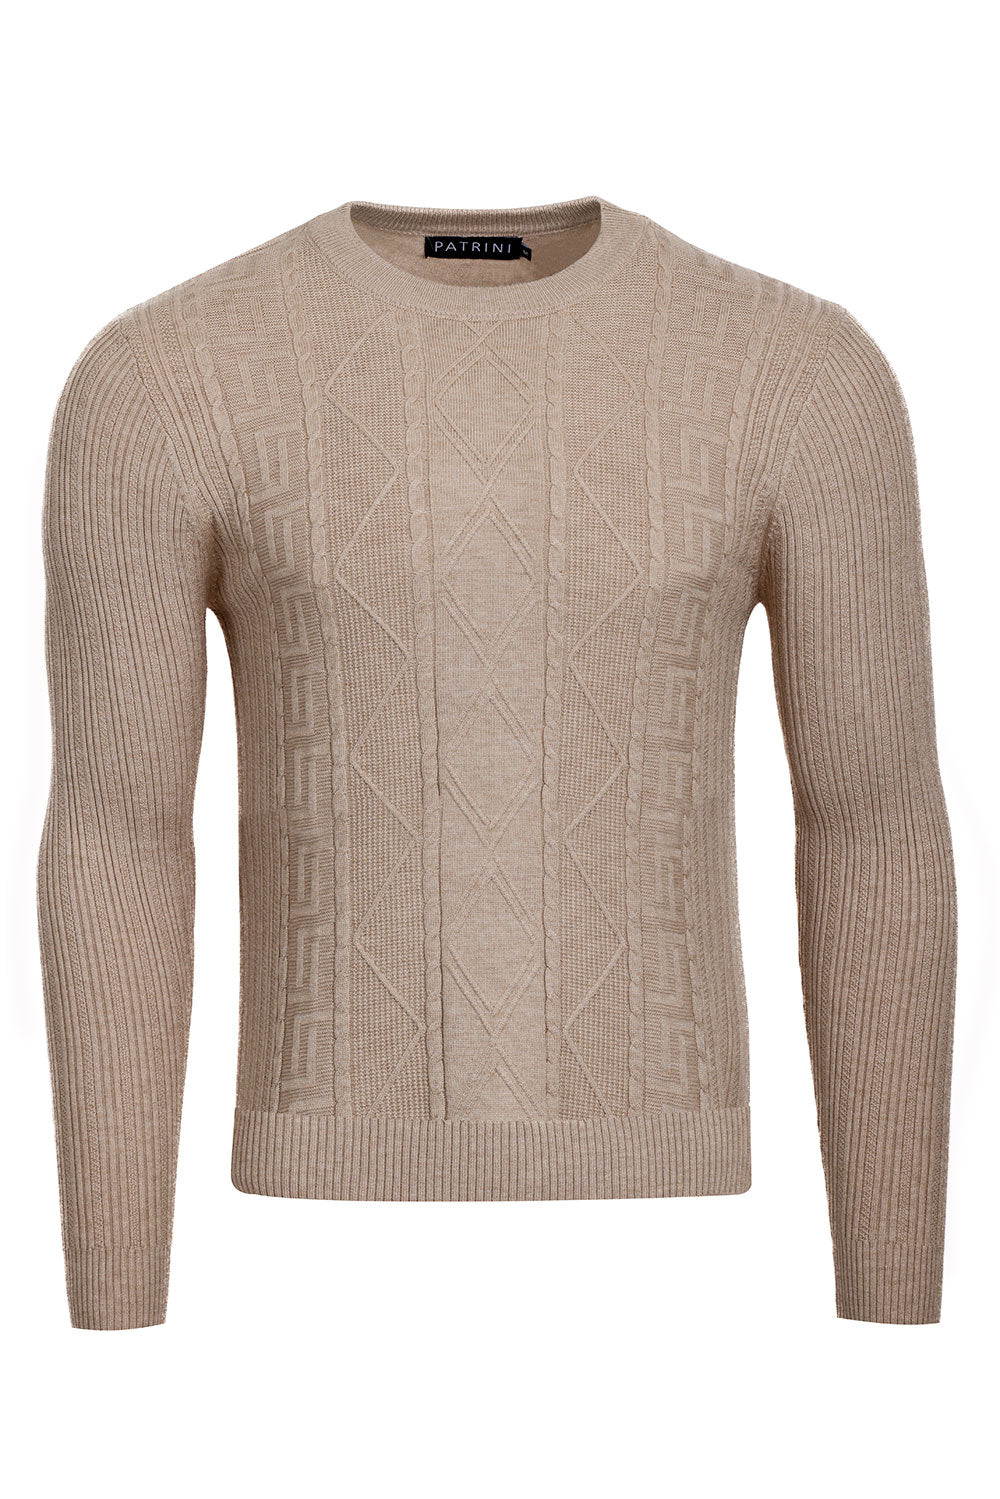 Barabas Men's Greek Key Knitted Stretch Crew Neck Sweaters 3PLS02 Khaki